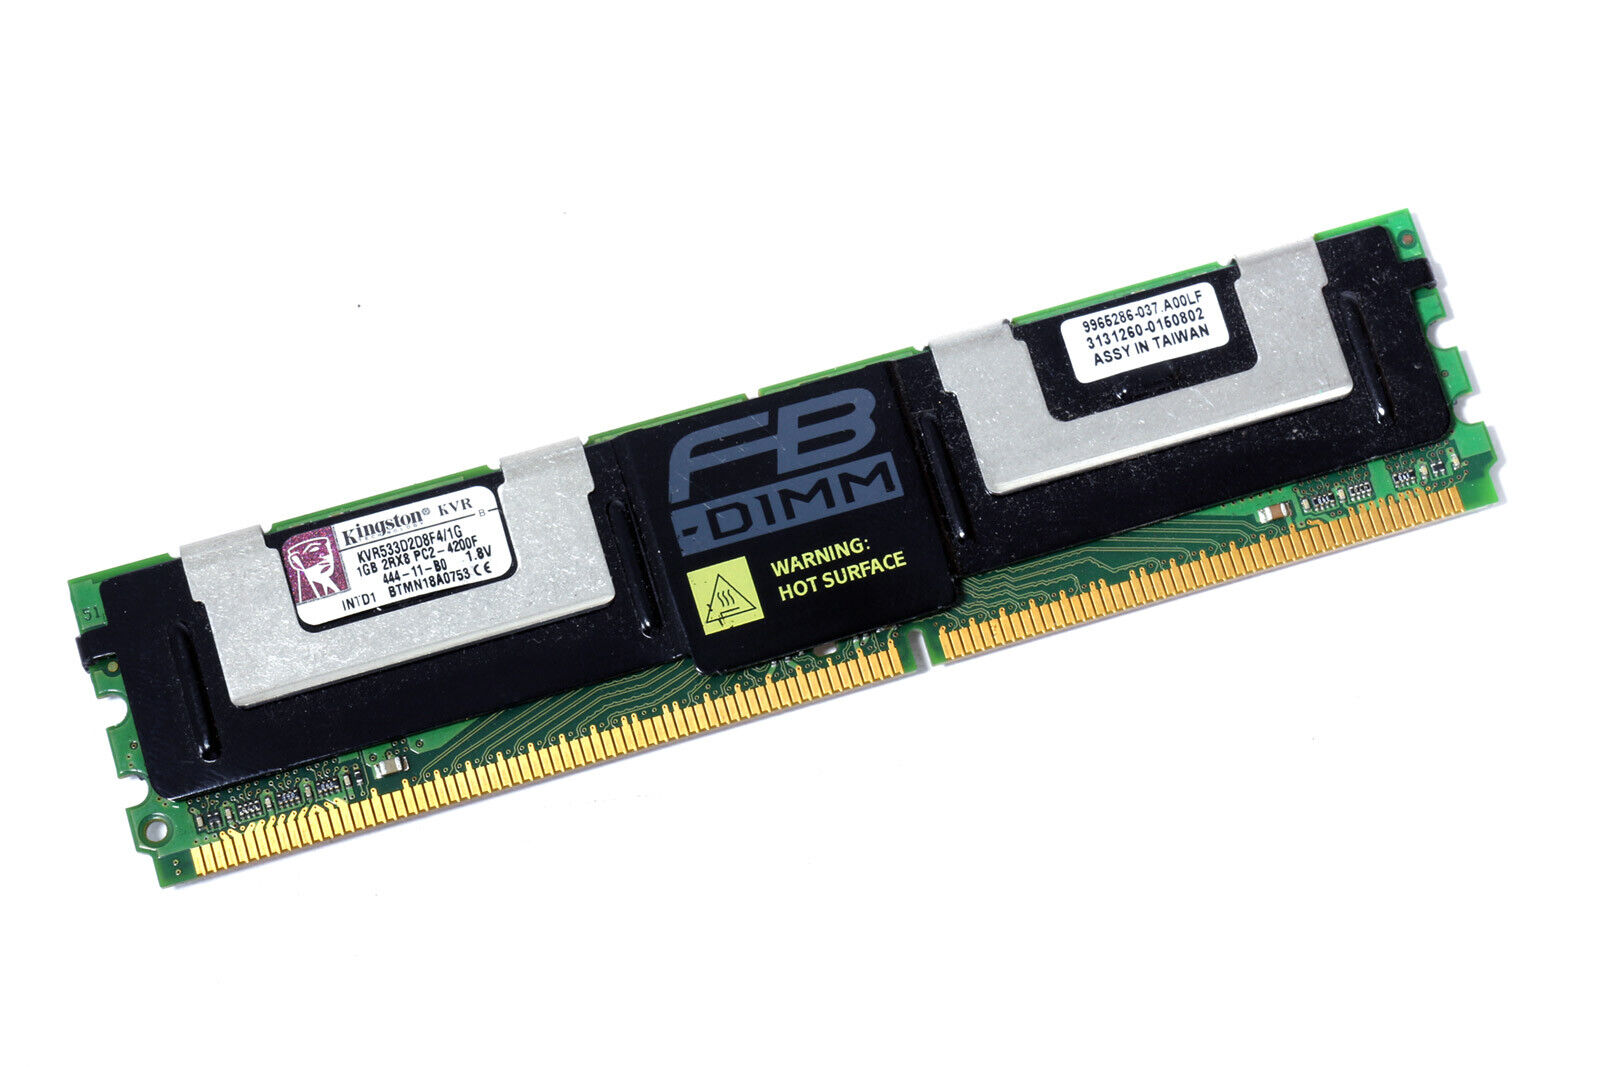 Kingston KVR533D2D8F4/1G 1GB Server Memory RAM